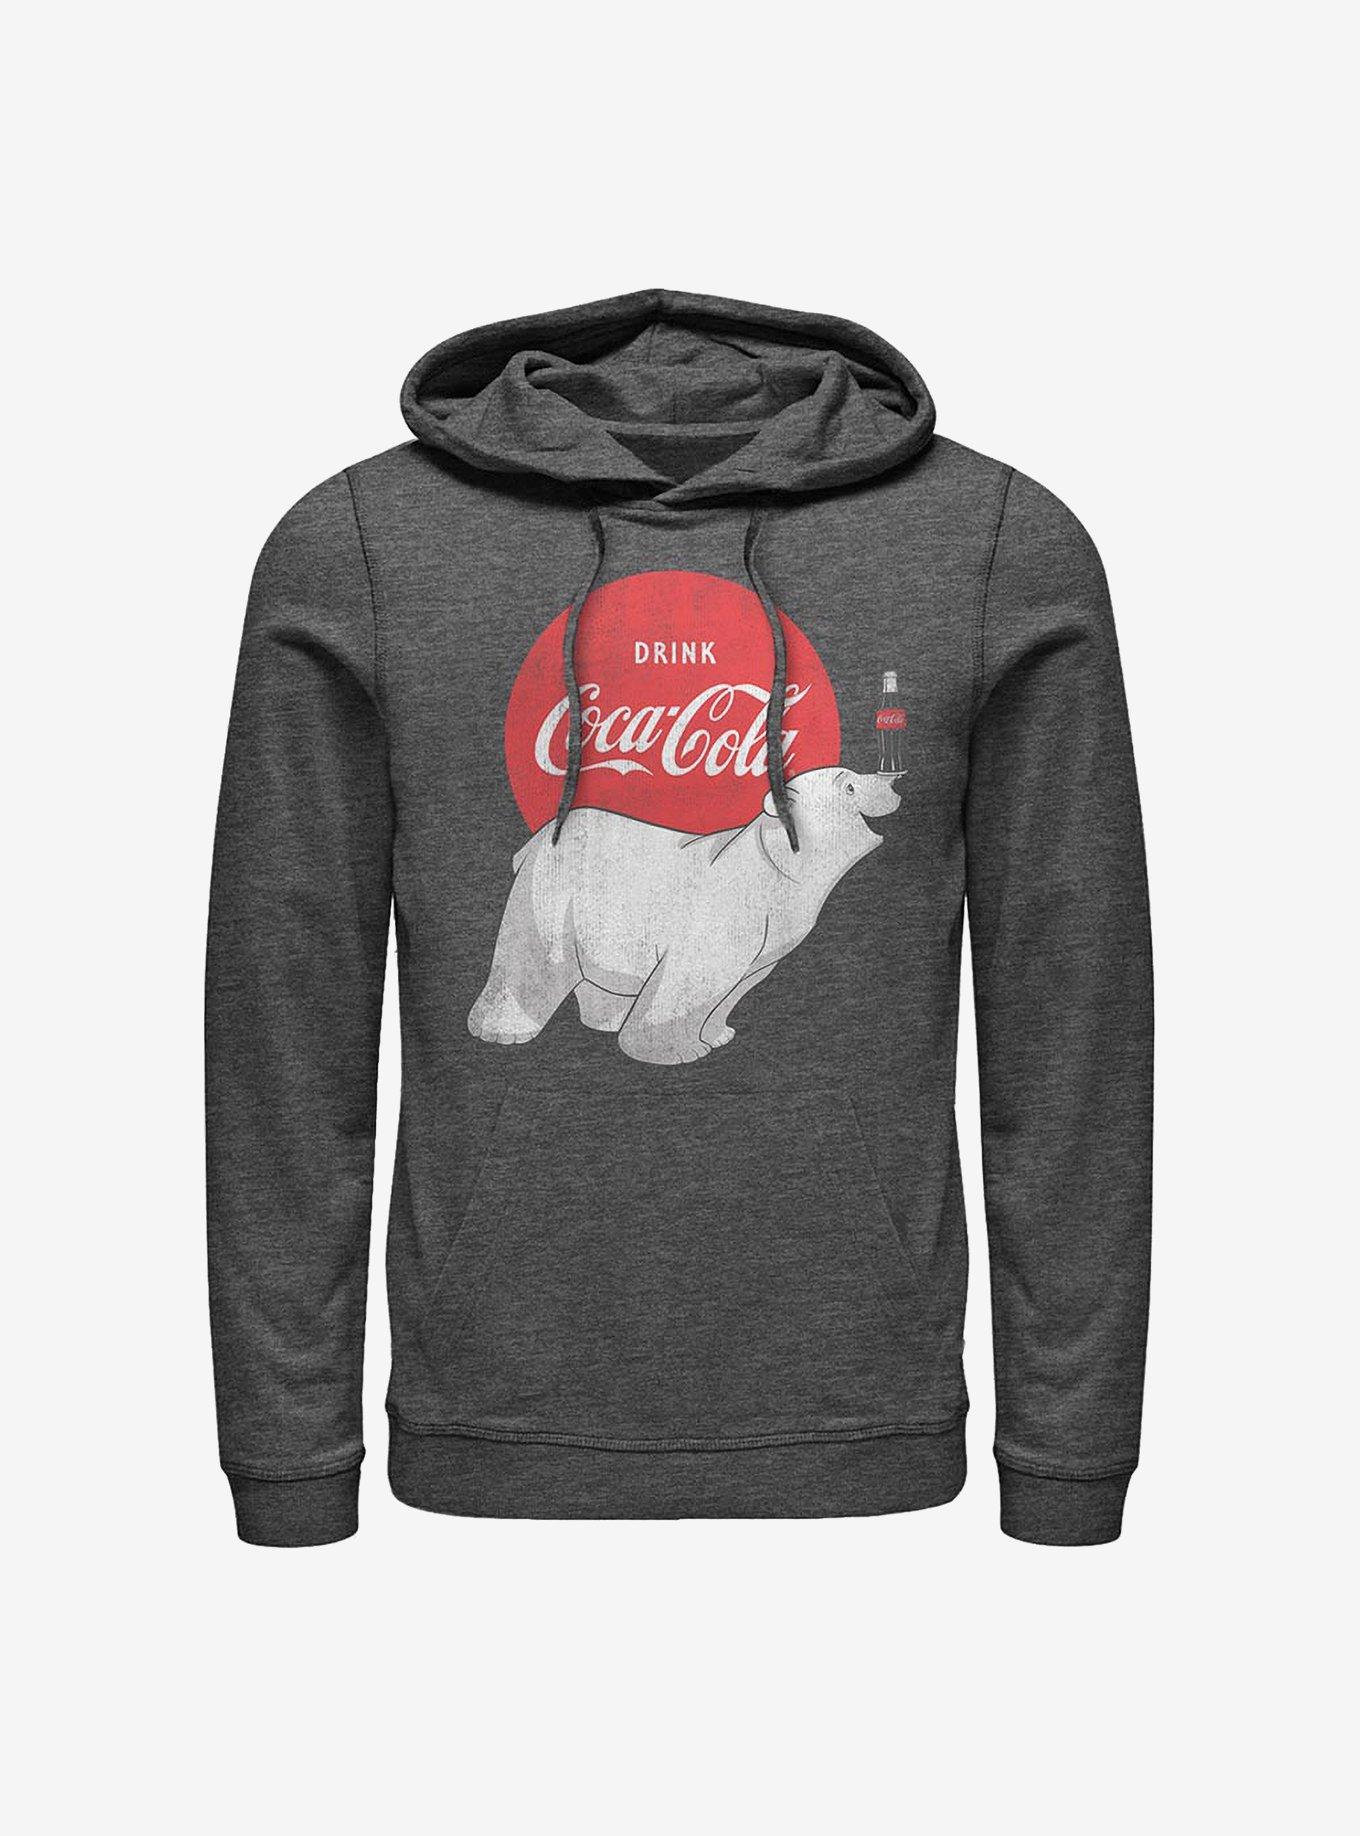 Coke Polar Hoodie, CHAR HTR, hi-res